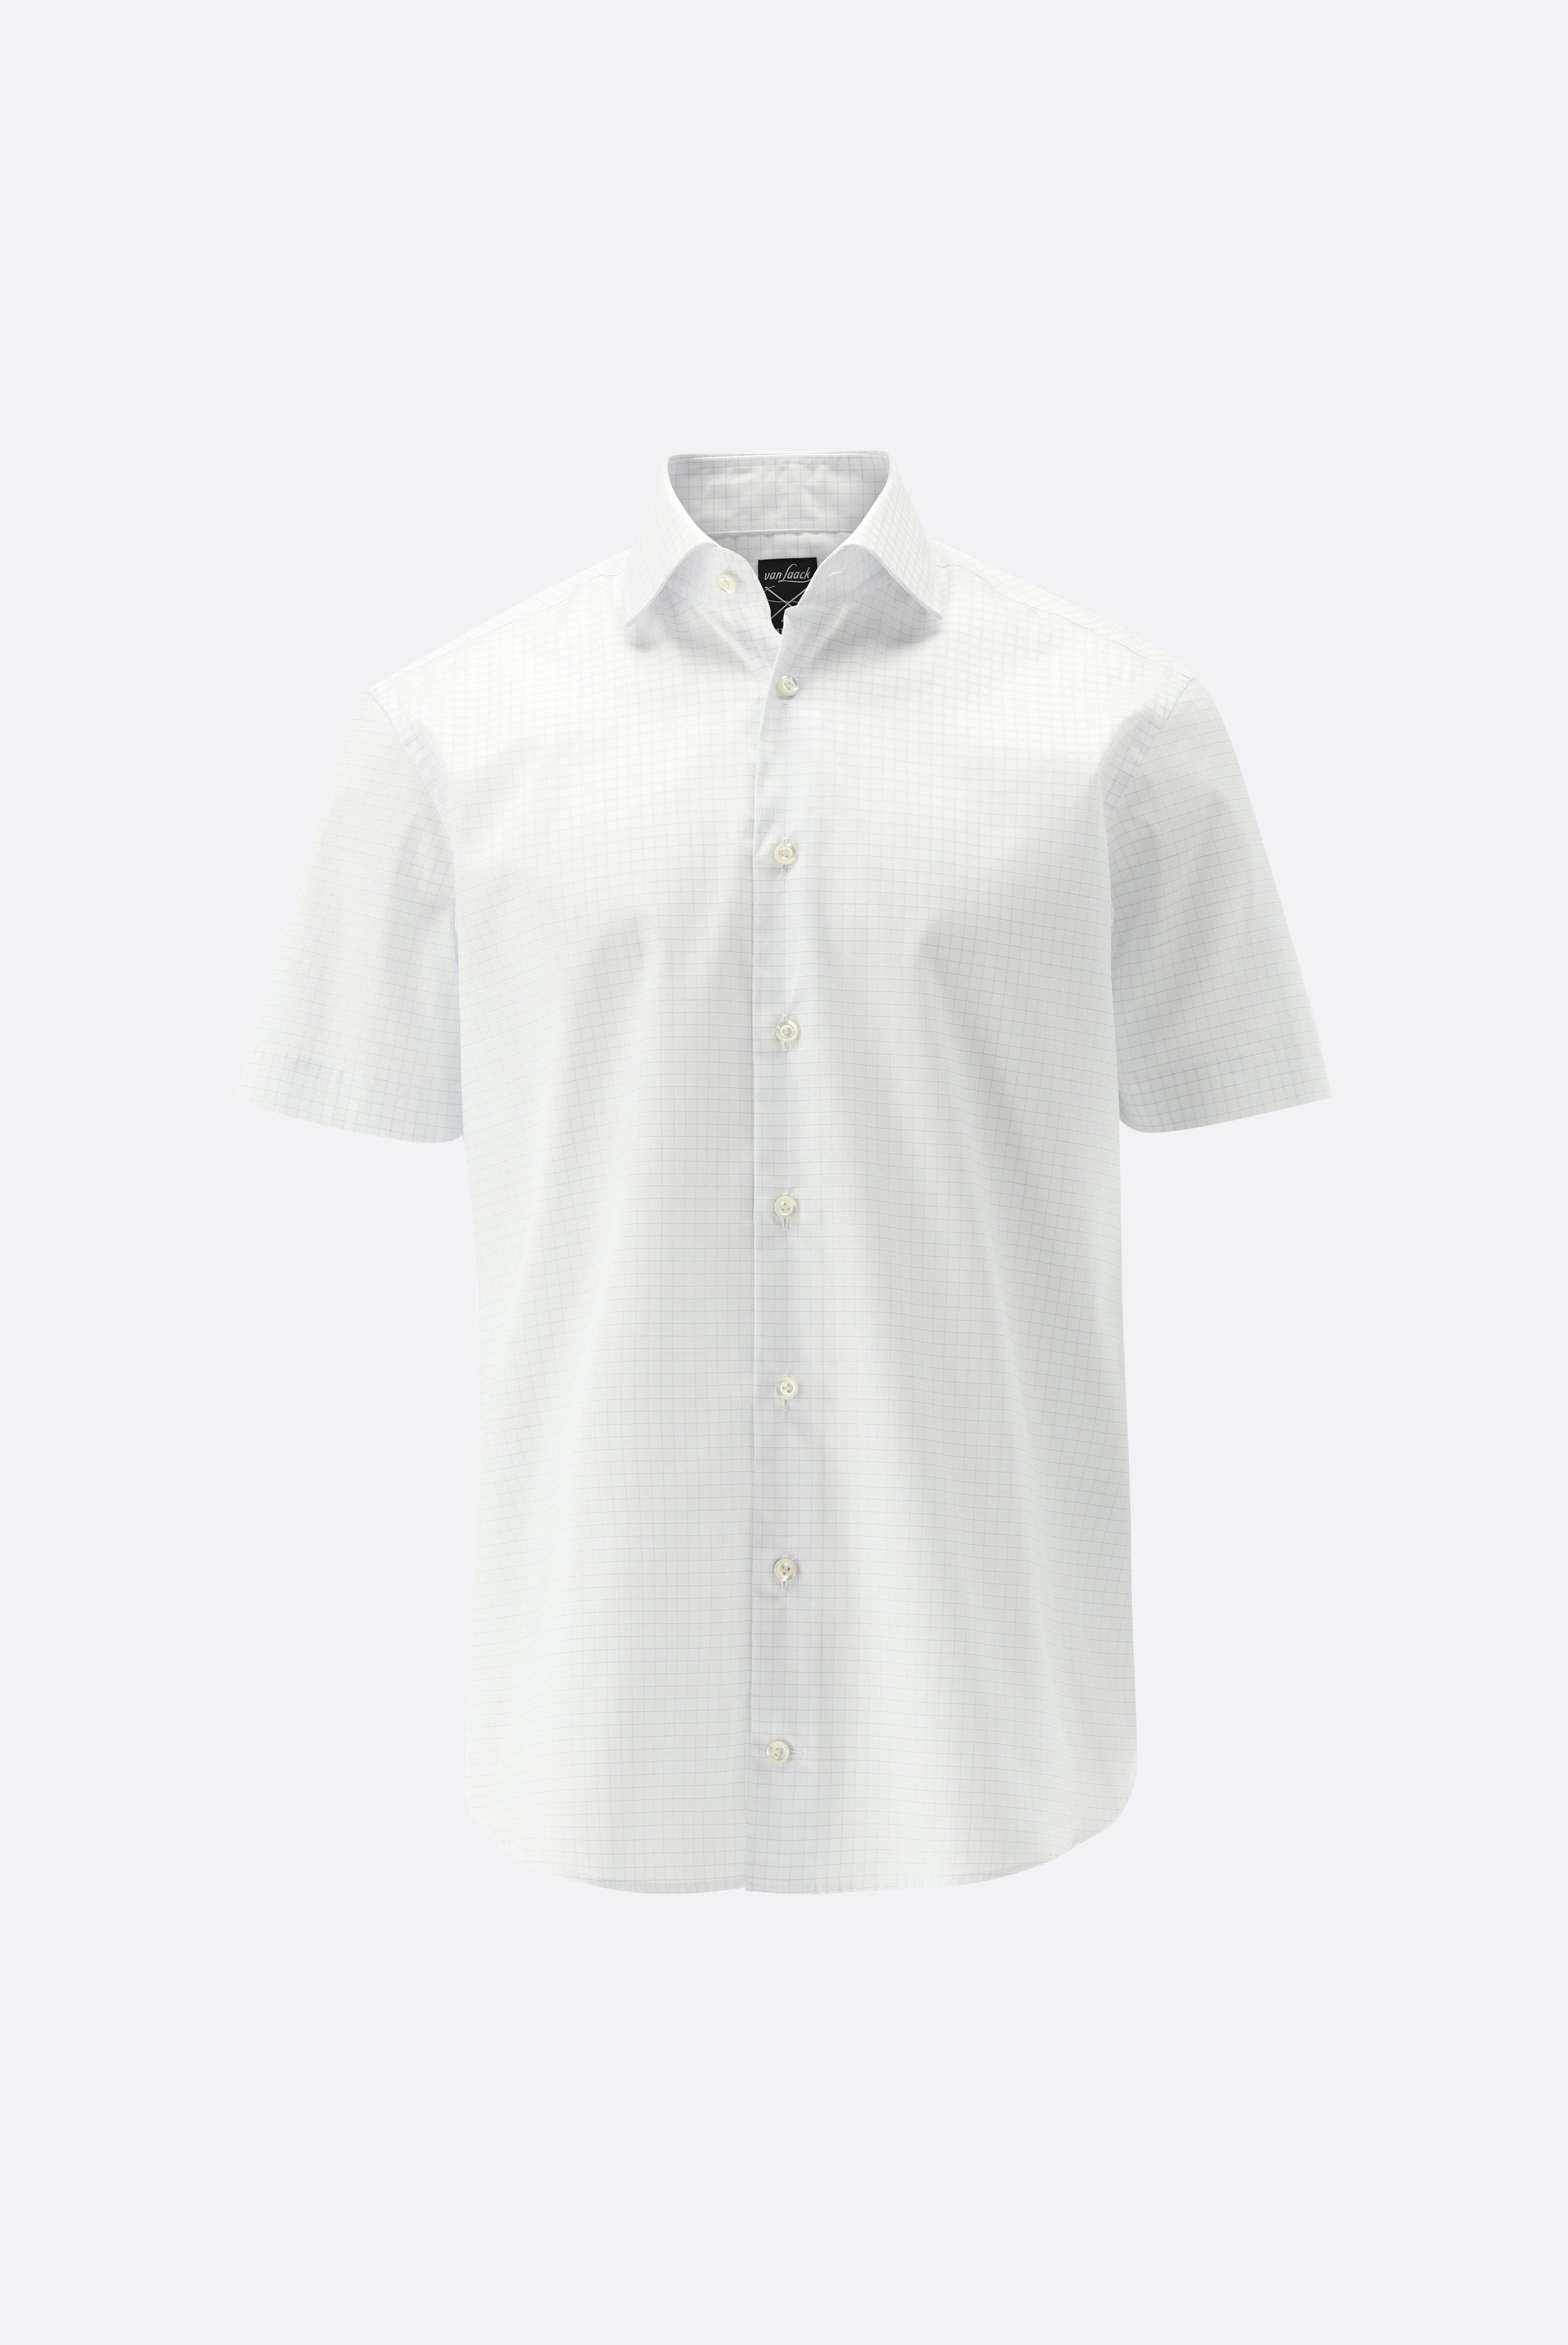 Casual Shirts+Wrinkle free checked Short-Sleeve Shirt+20.2048.QM.161105.007.38